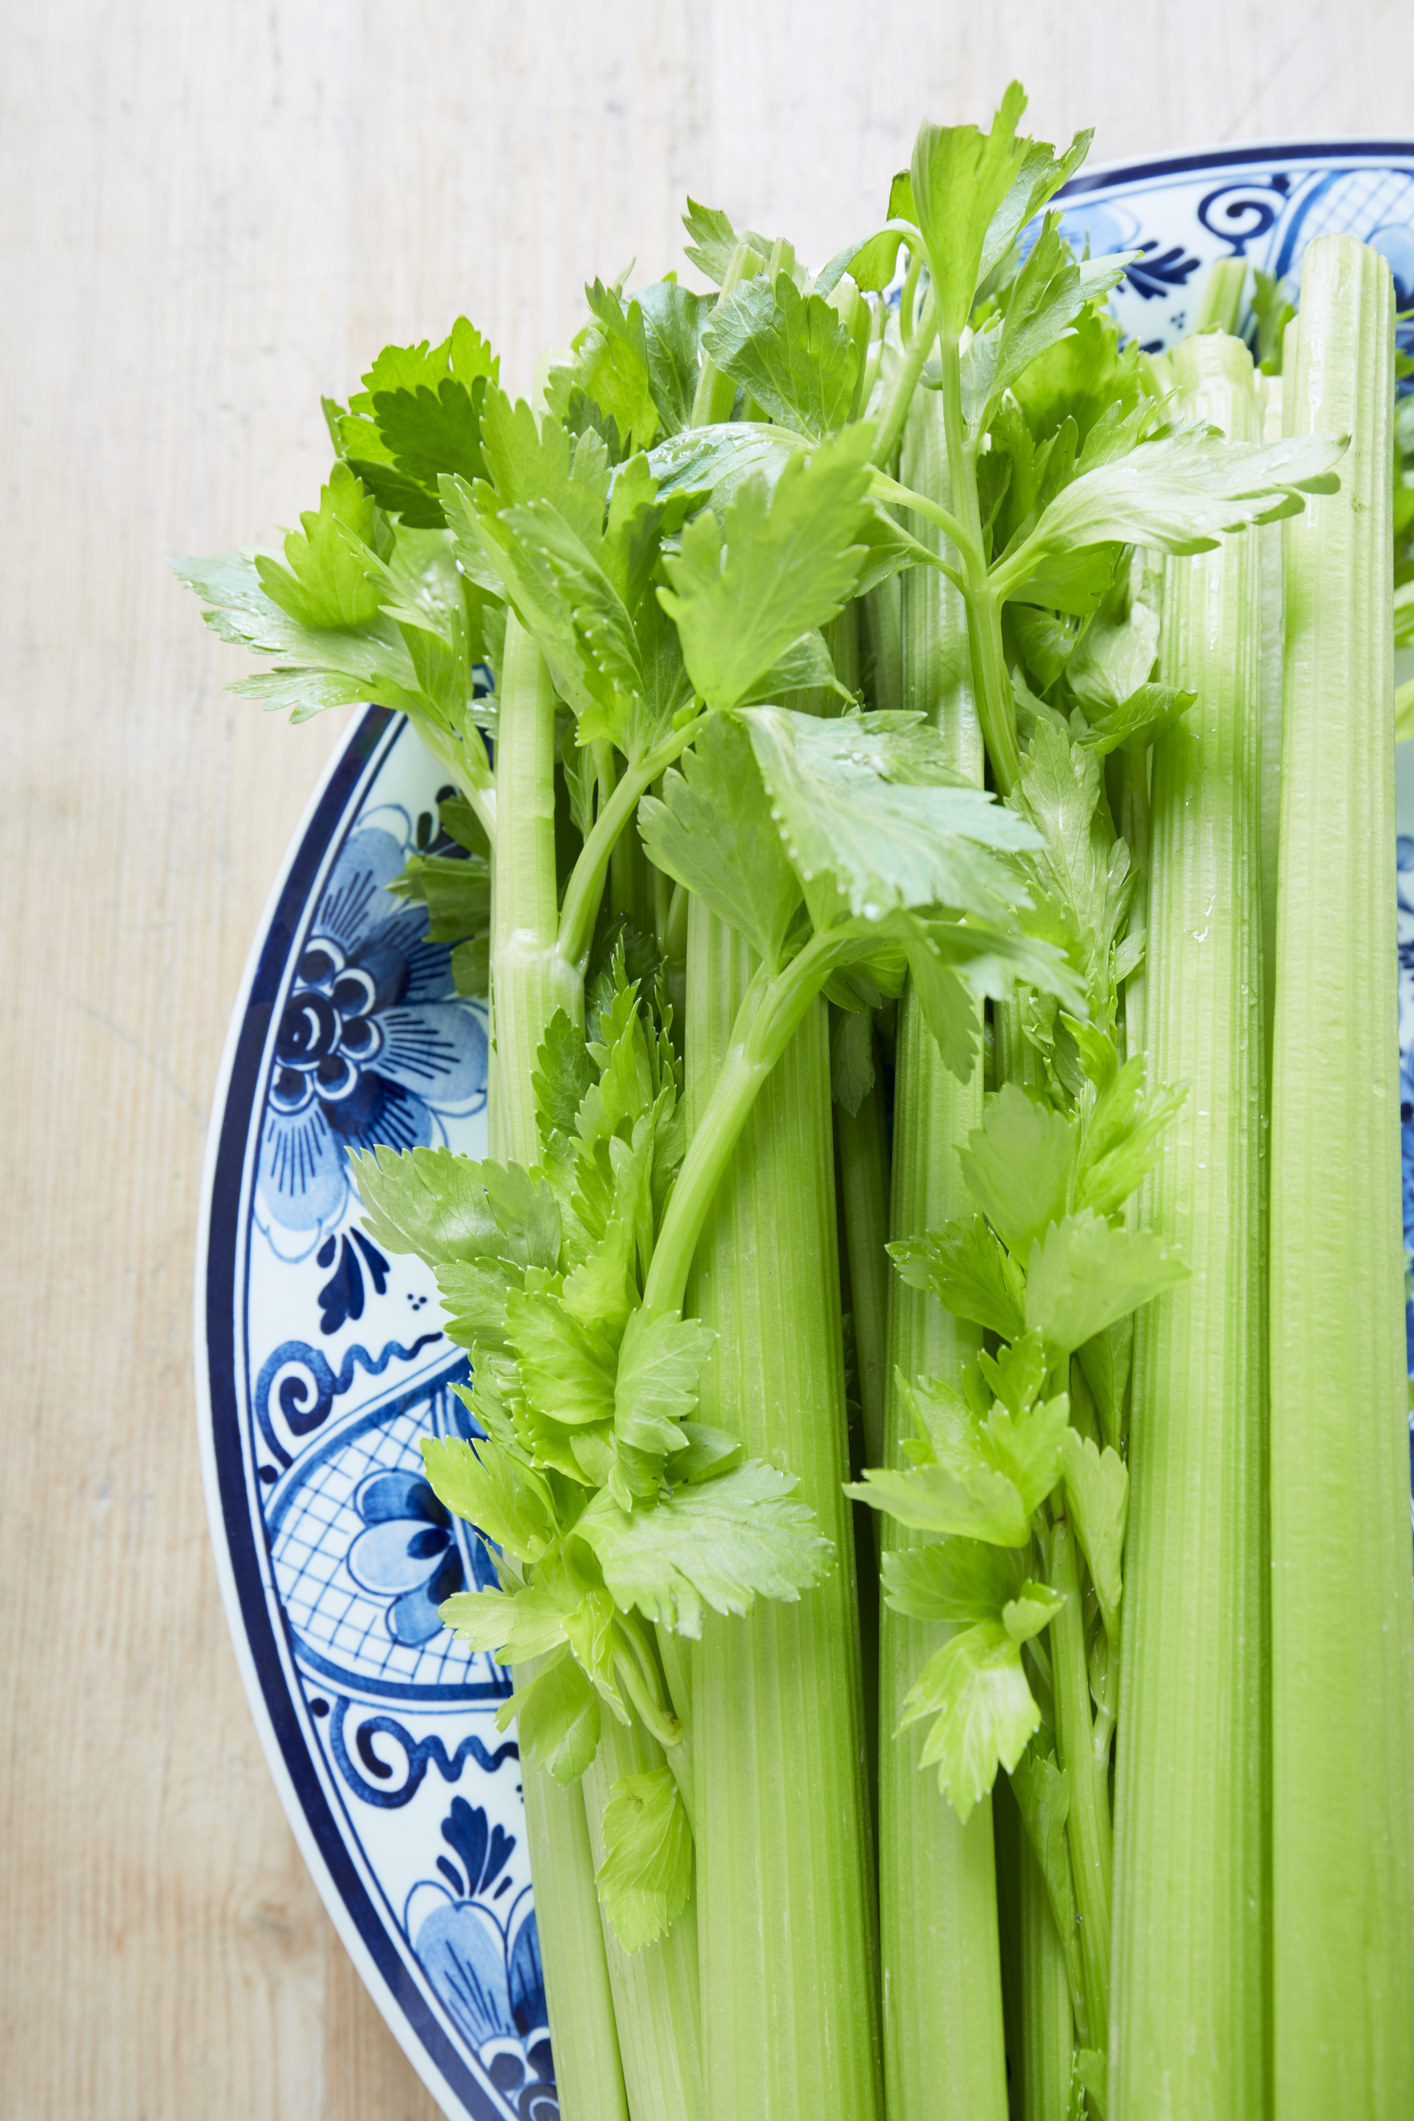 Raw celery sticks on a plate.